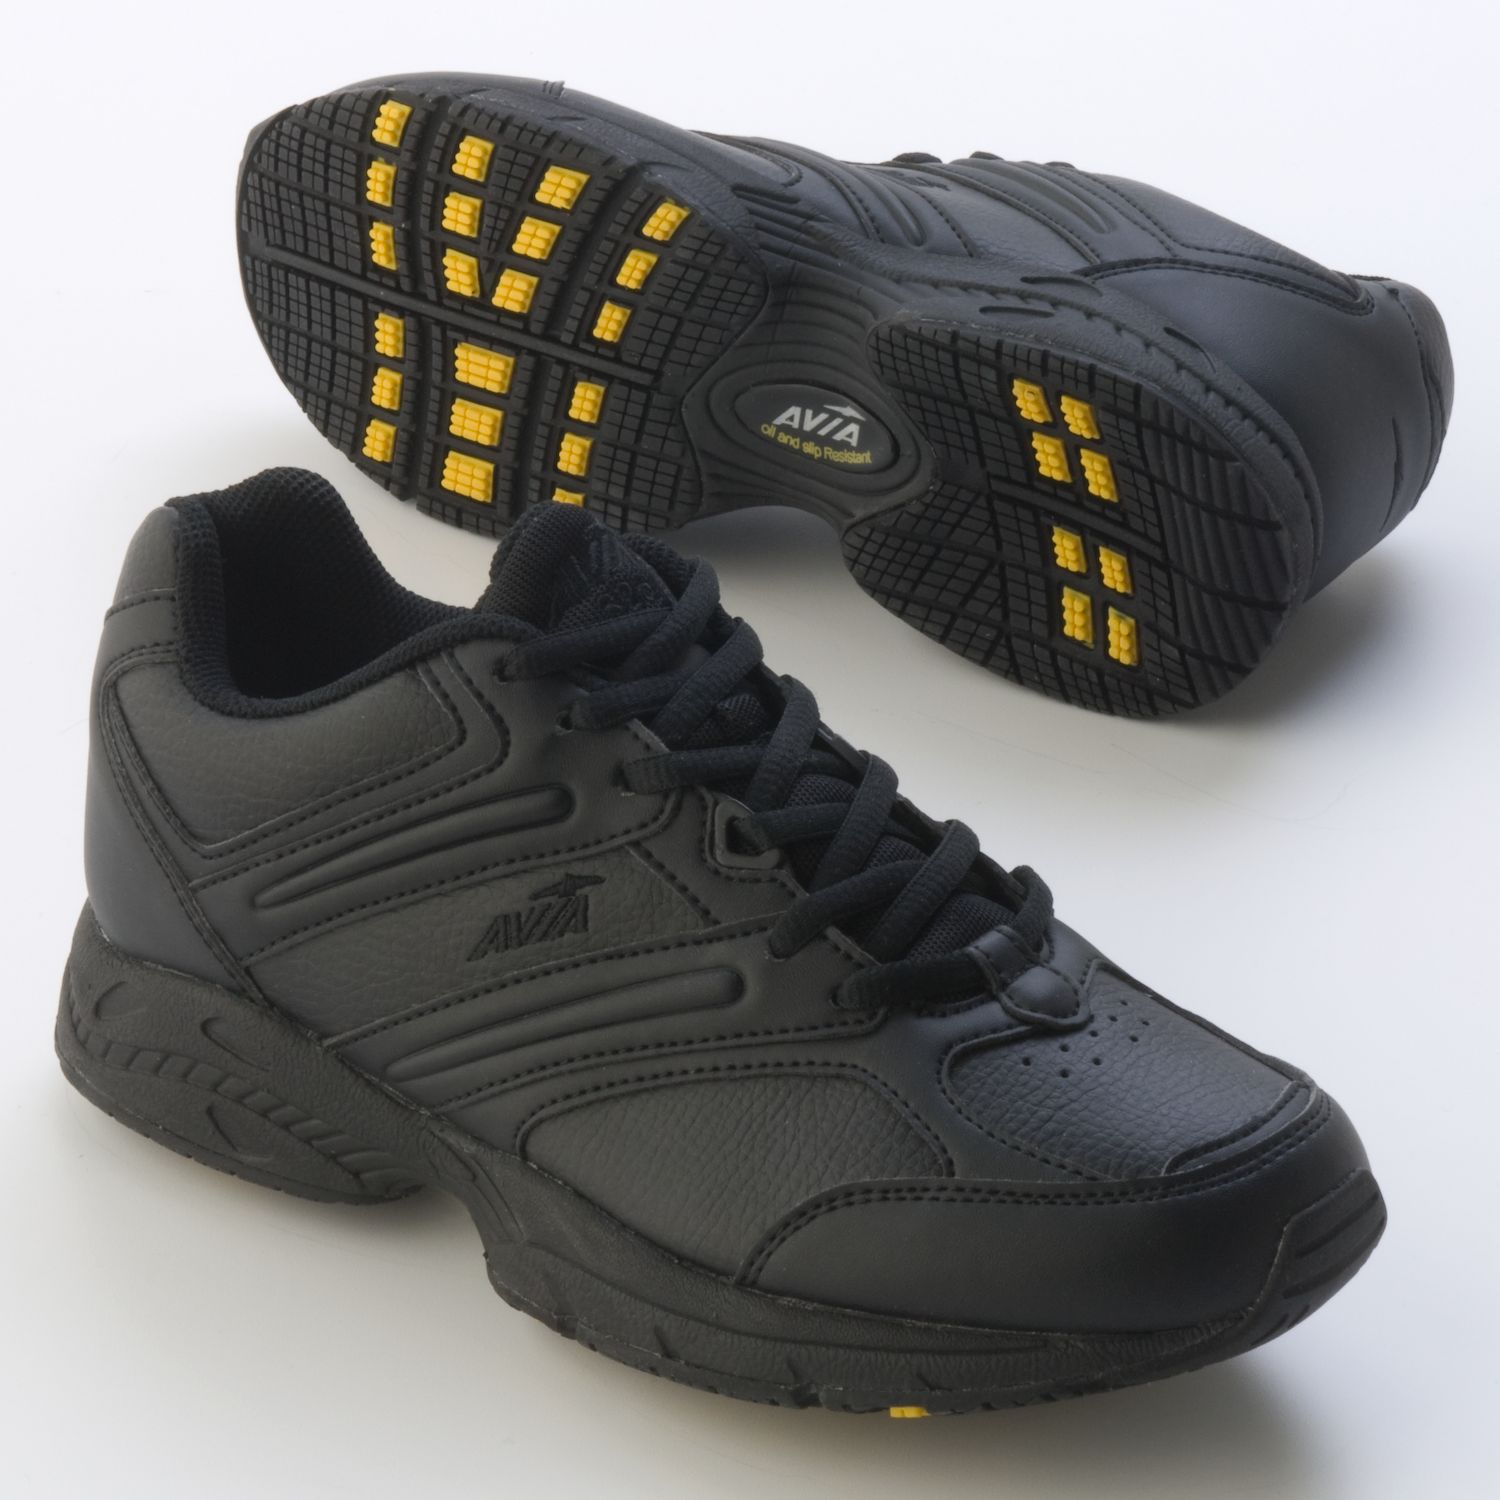 Avia 325 Slip-Resistant Walking Shoes 